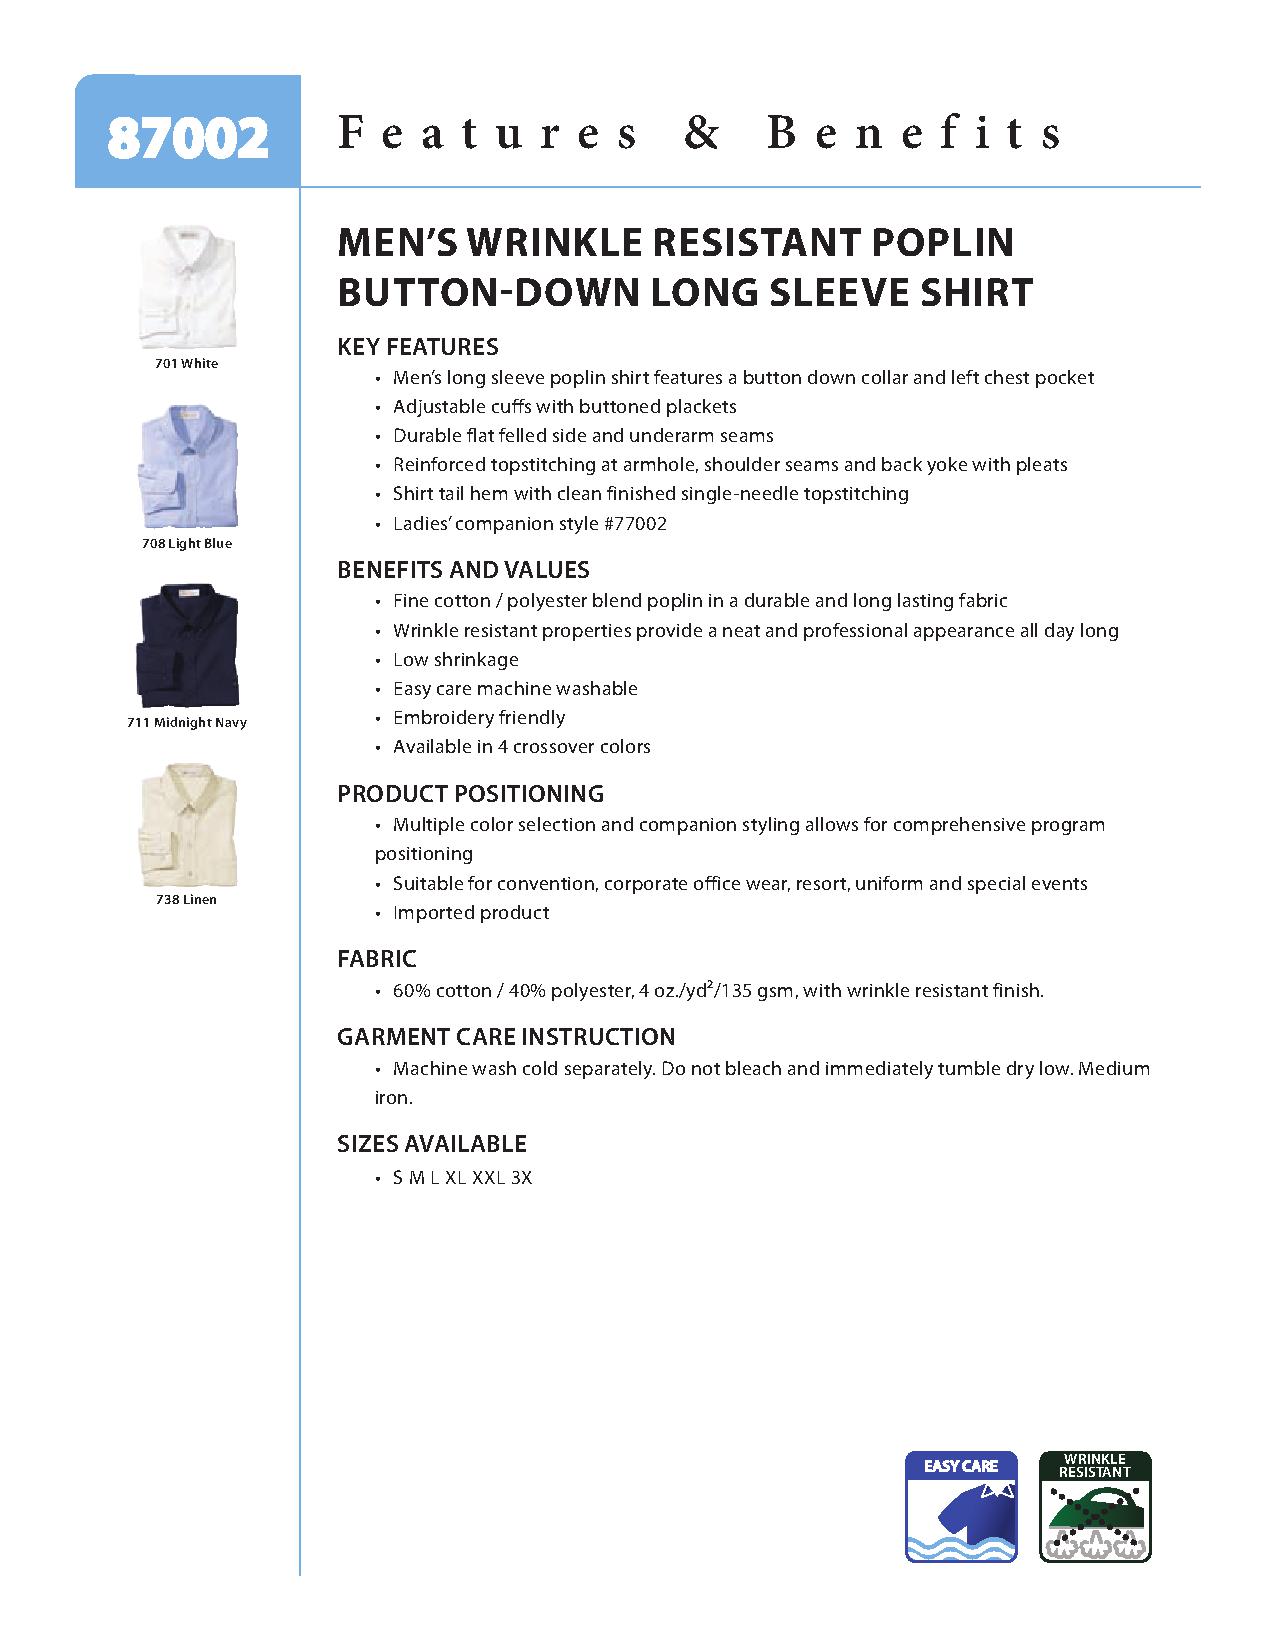 Ash City Easy care 87002 - Men's Wrinkle Resistant Poplin Button-Down Long Sleeve Shirt